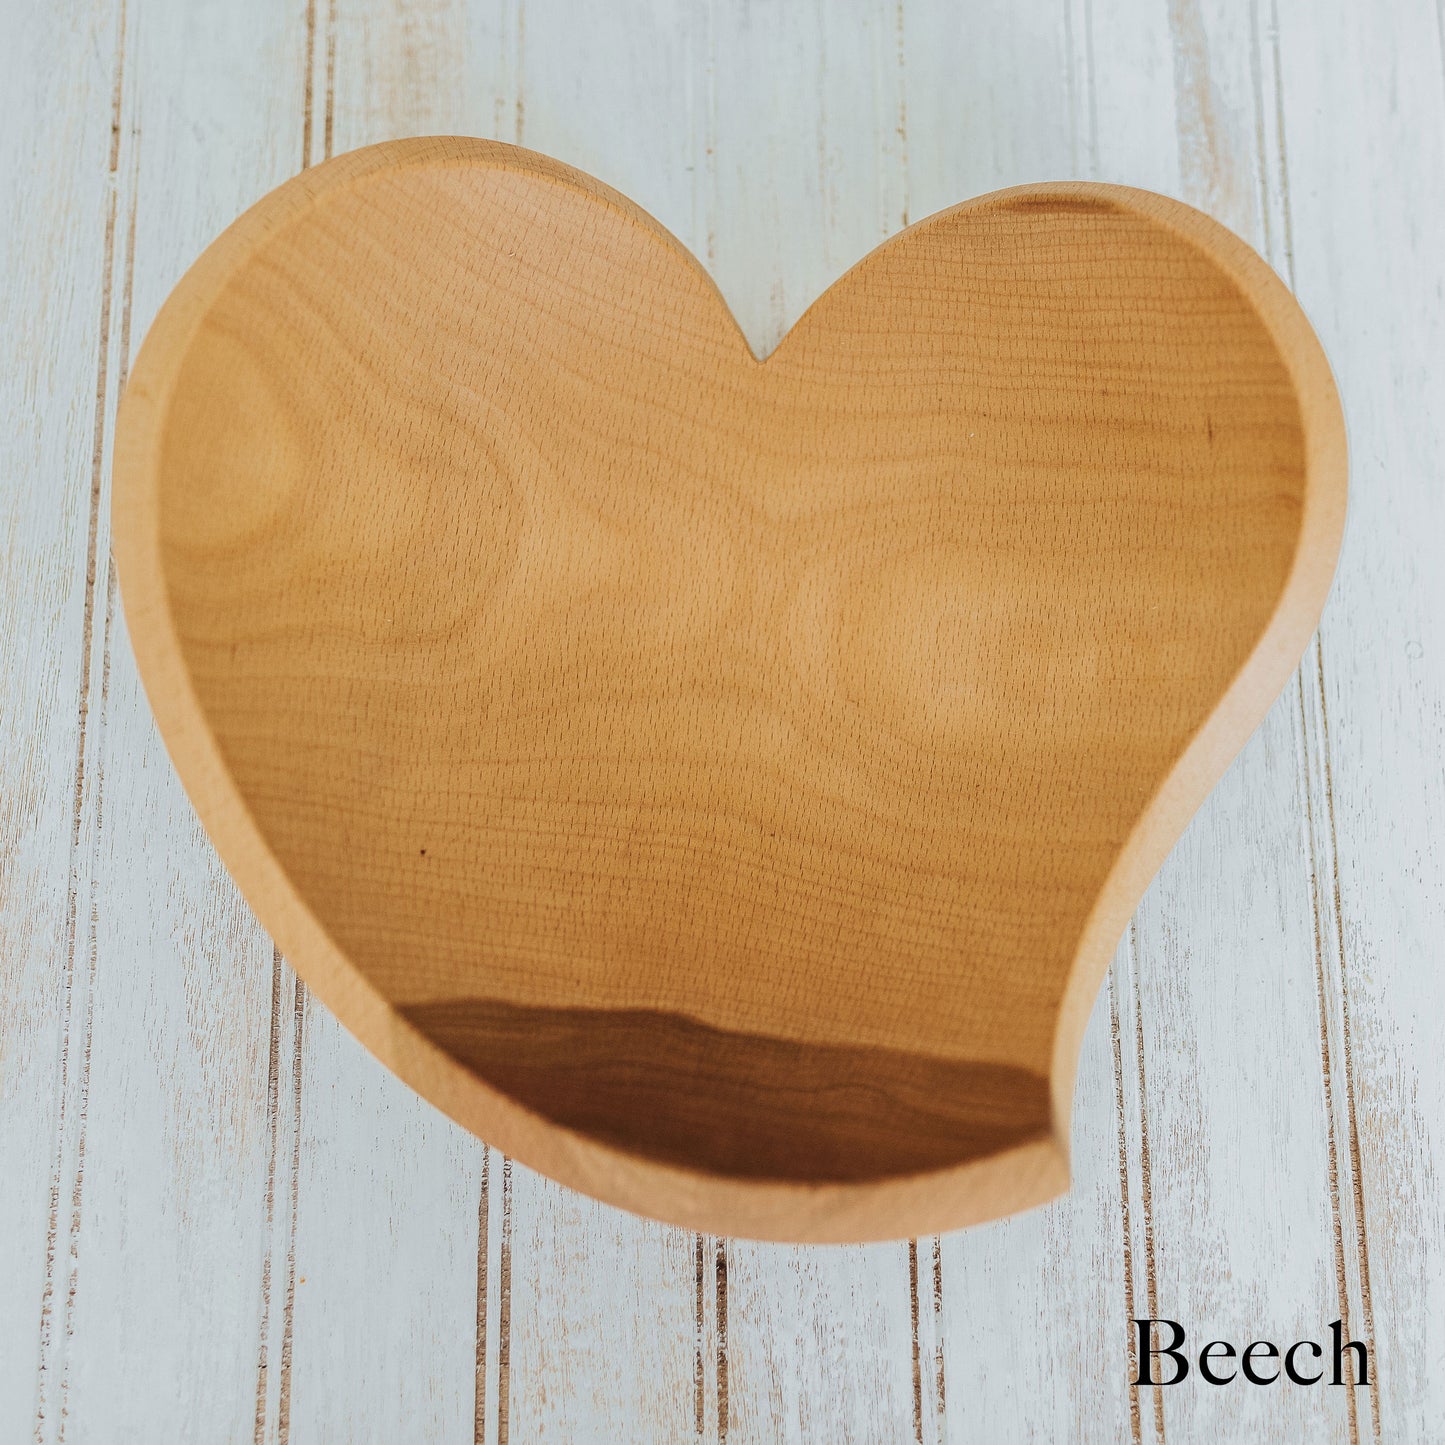 12 inch Heart Shaped Bowls (American Hardwood)